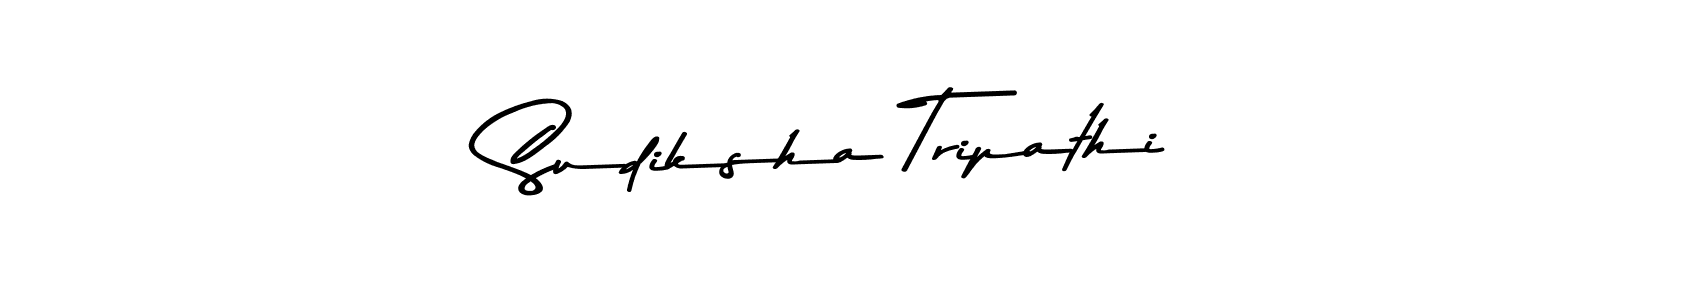 How to Draw Sudiksha Tripathi signature style? Asem Kandis PERSONAL USE is a latest design signature styles for name Sudiksha Tripathi. Sudiksha Tripathi signature style 9 images and pictures png